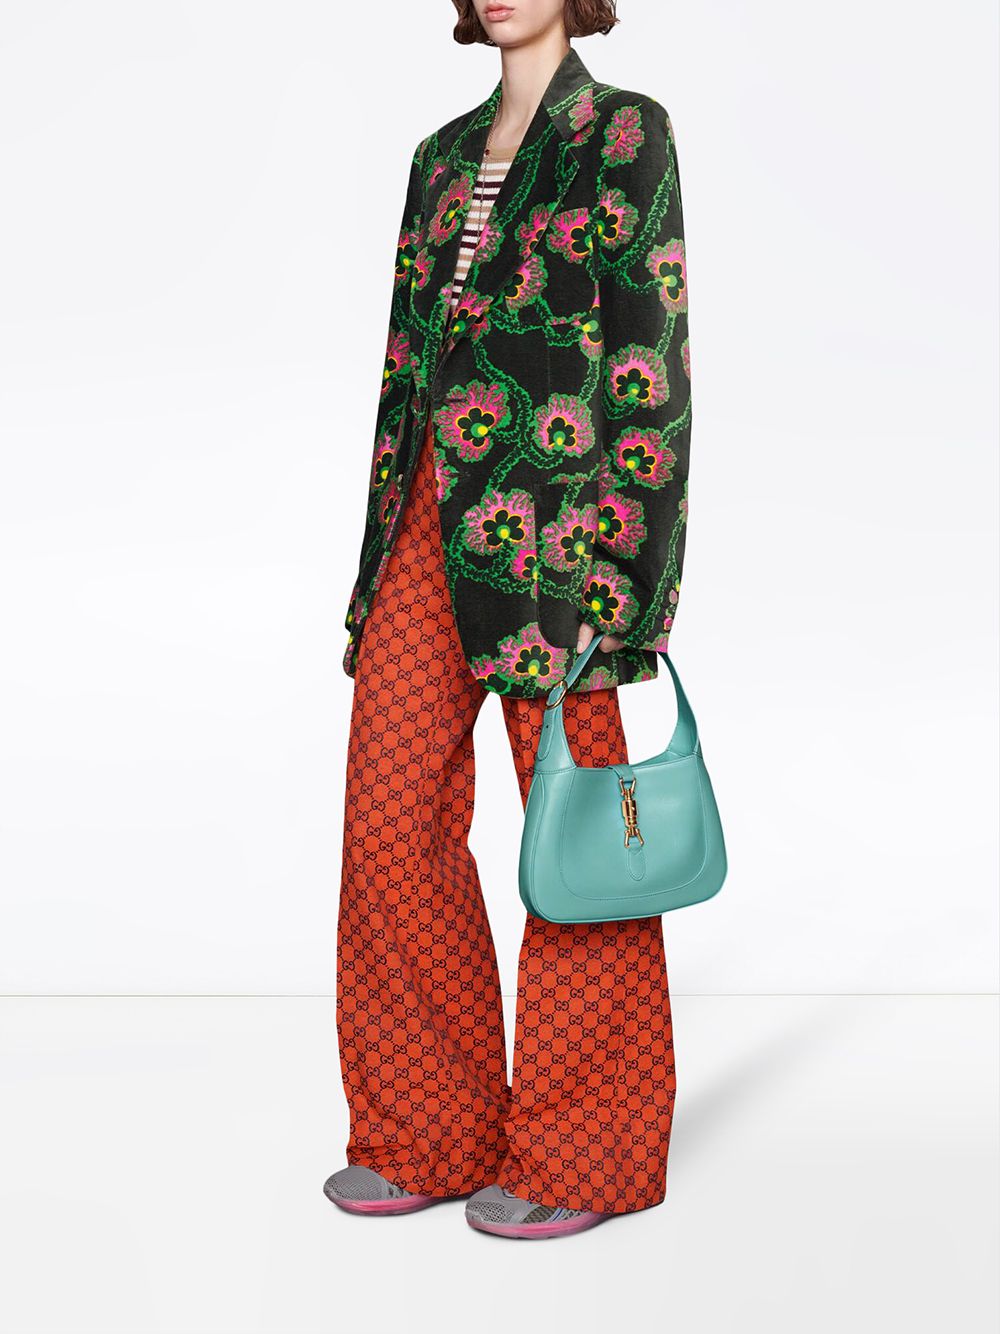 Gucci x Ken Scott Floral Print Velvet Jacket - Farfetch